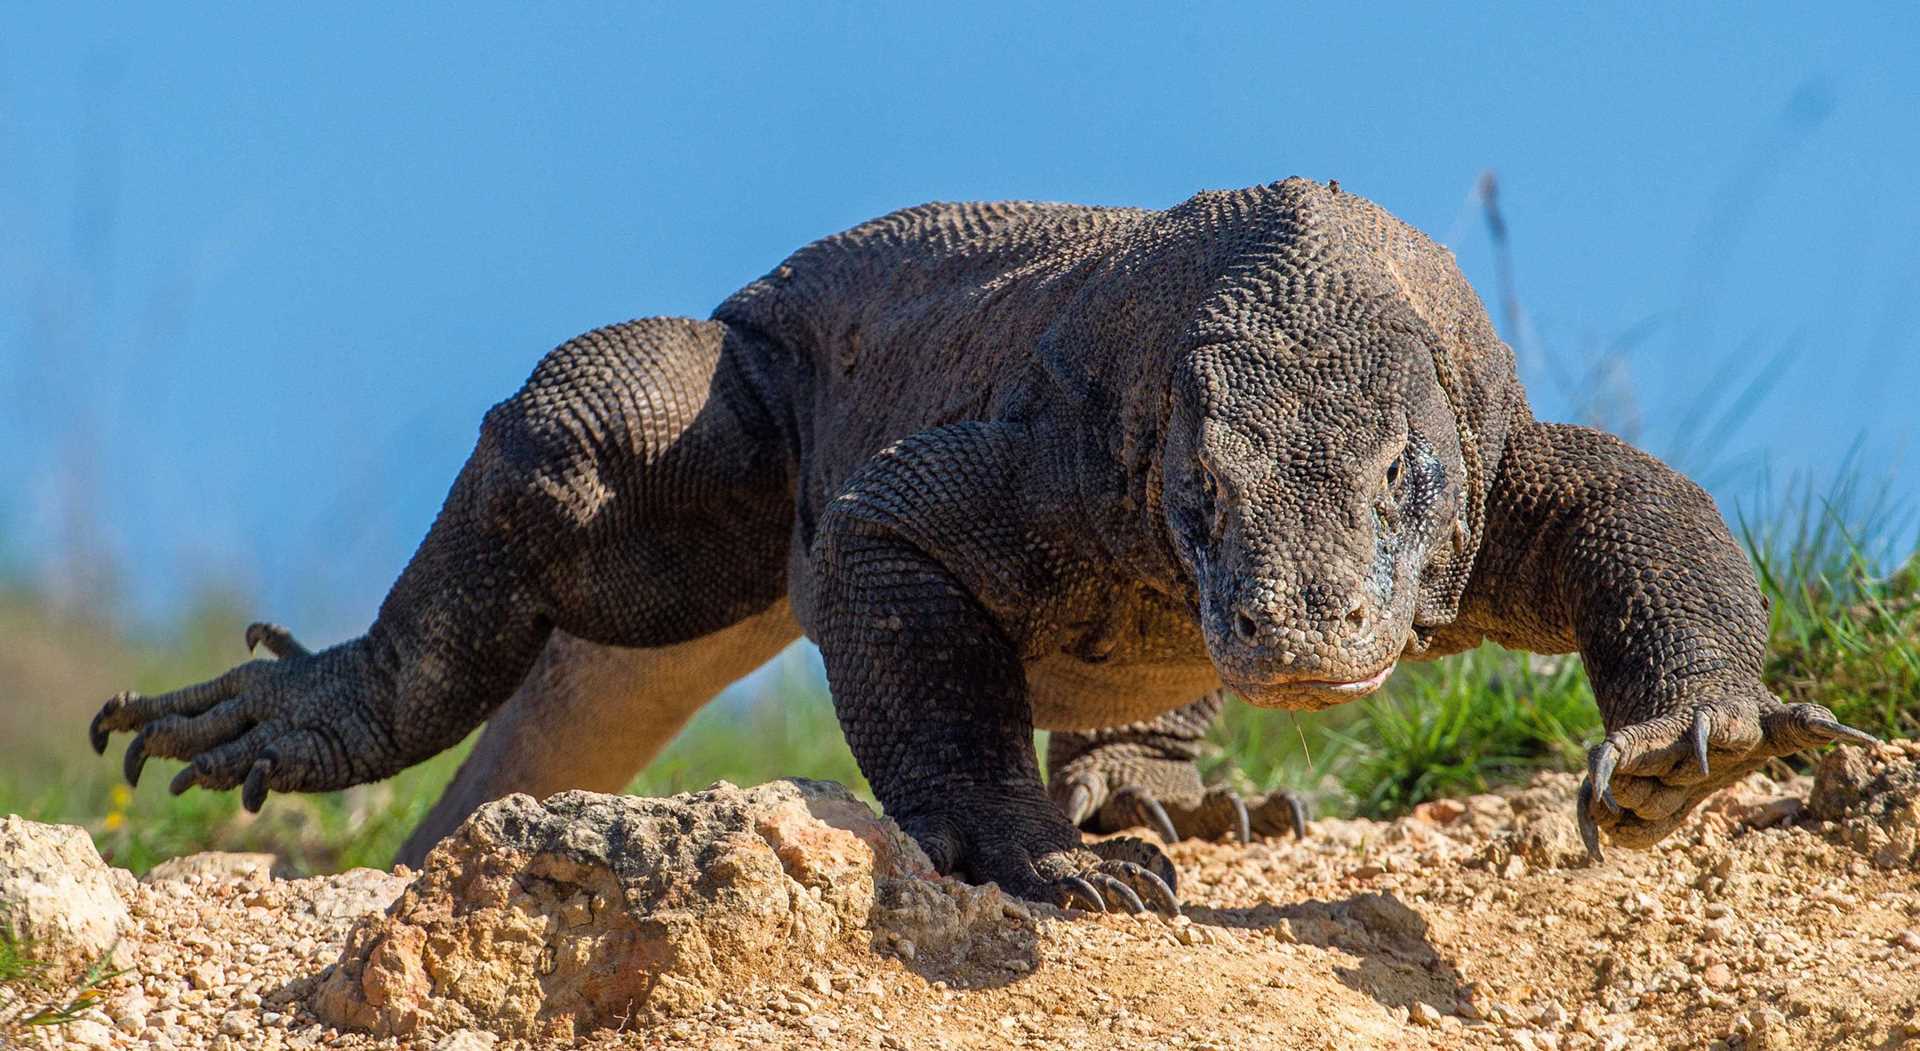 Found only in Indonesia's Komodo National Park, a Komodo dragon navigates rocky terrain